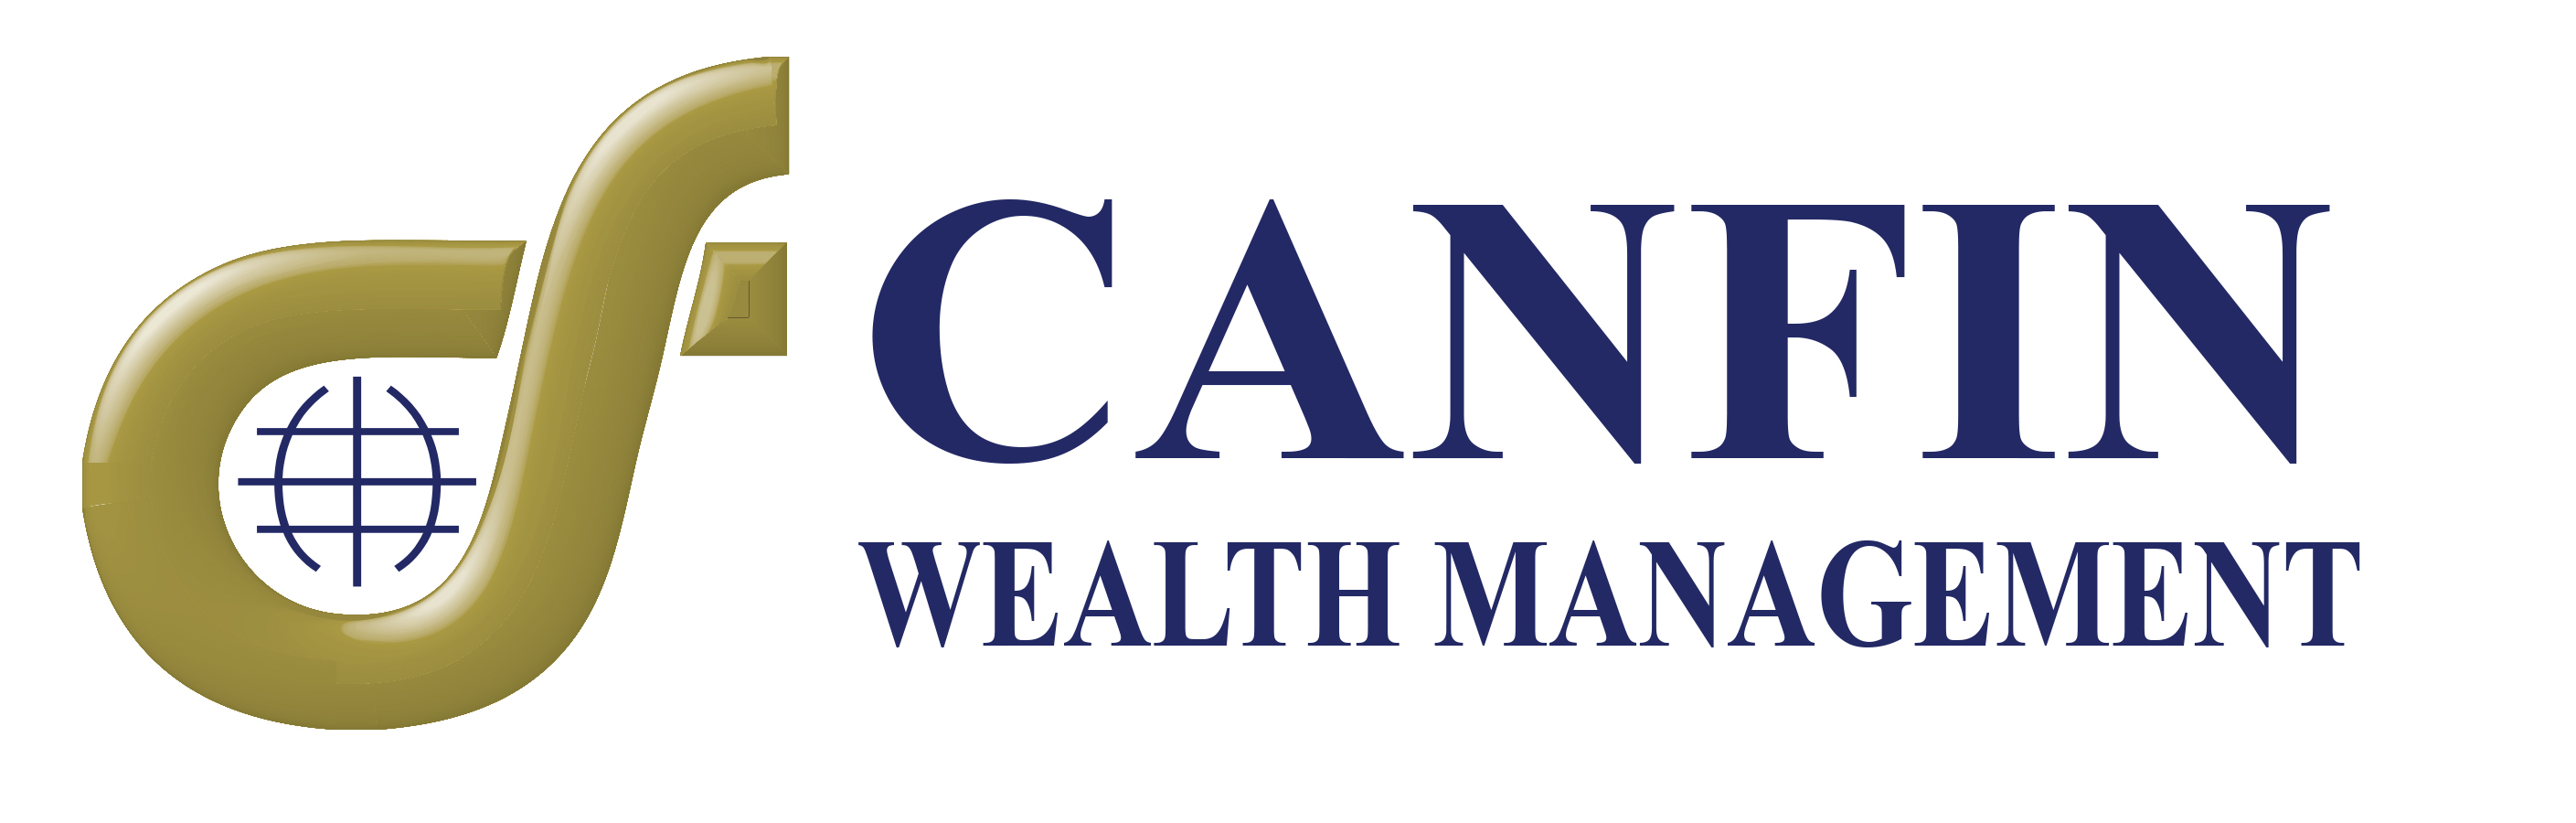 Grant Matossian - CANFIN Financial Group - Logo